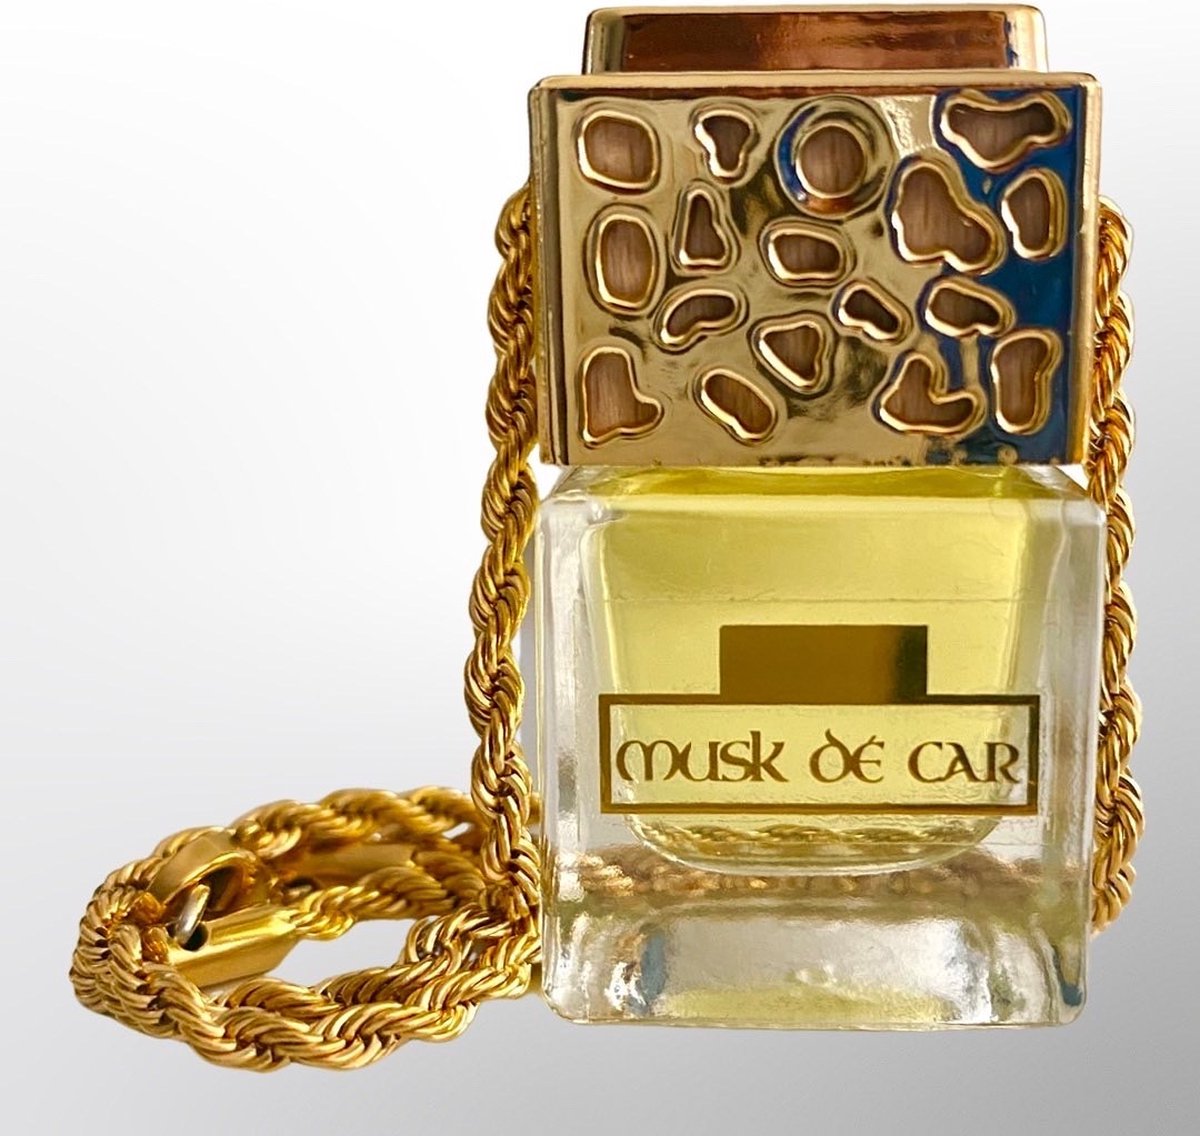 Musk dé Car Exclusive - Autoparfum - Lost Cherry - Zoet - Fruitig - Gouden hanger 18k gold plated - goud - car perfume - autoverfrisser - olie diffuser - Lost Cherry